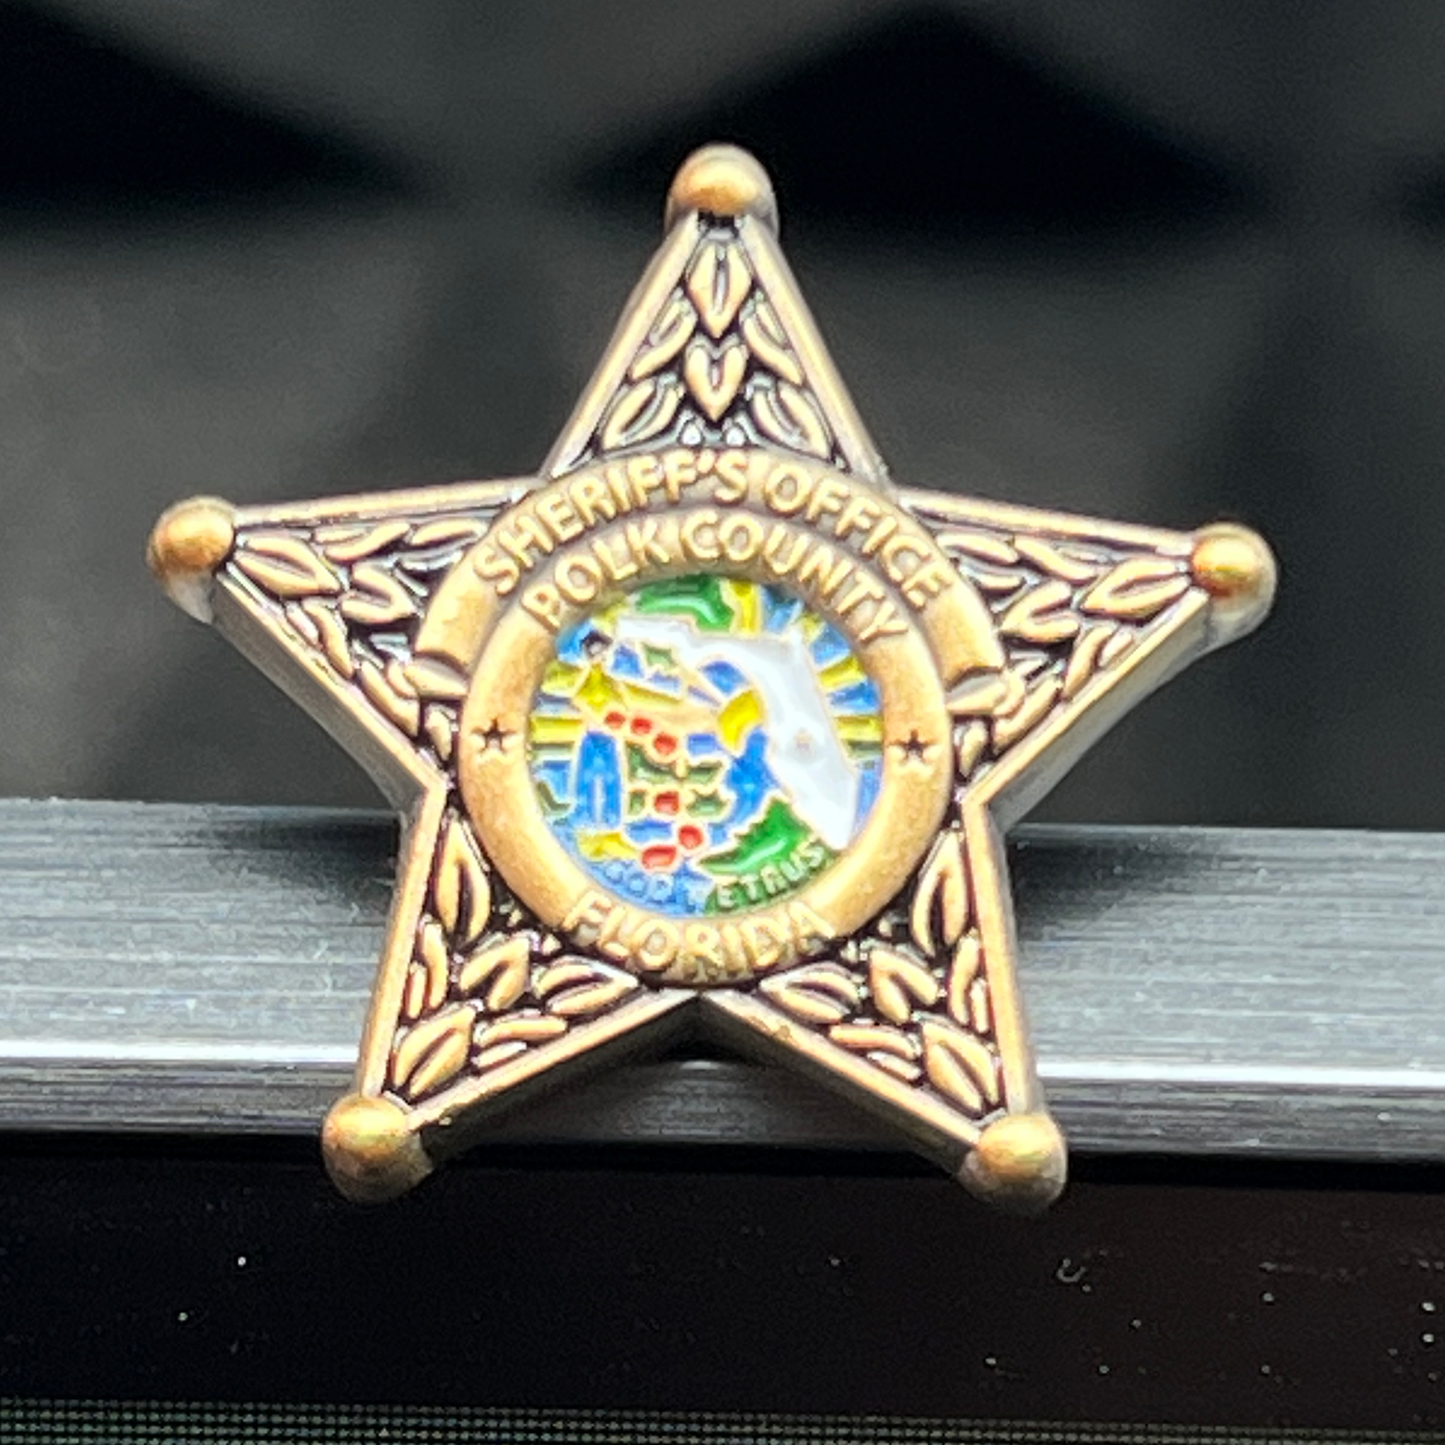 BFP-013 Polk County Florida Deputy Sheriff Lapel Pin Grady Judd